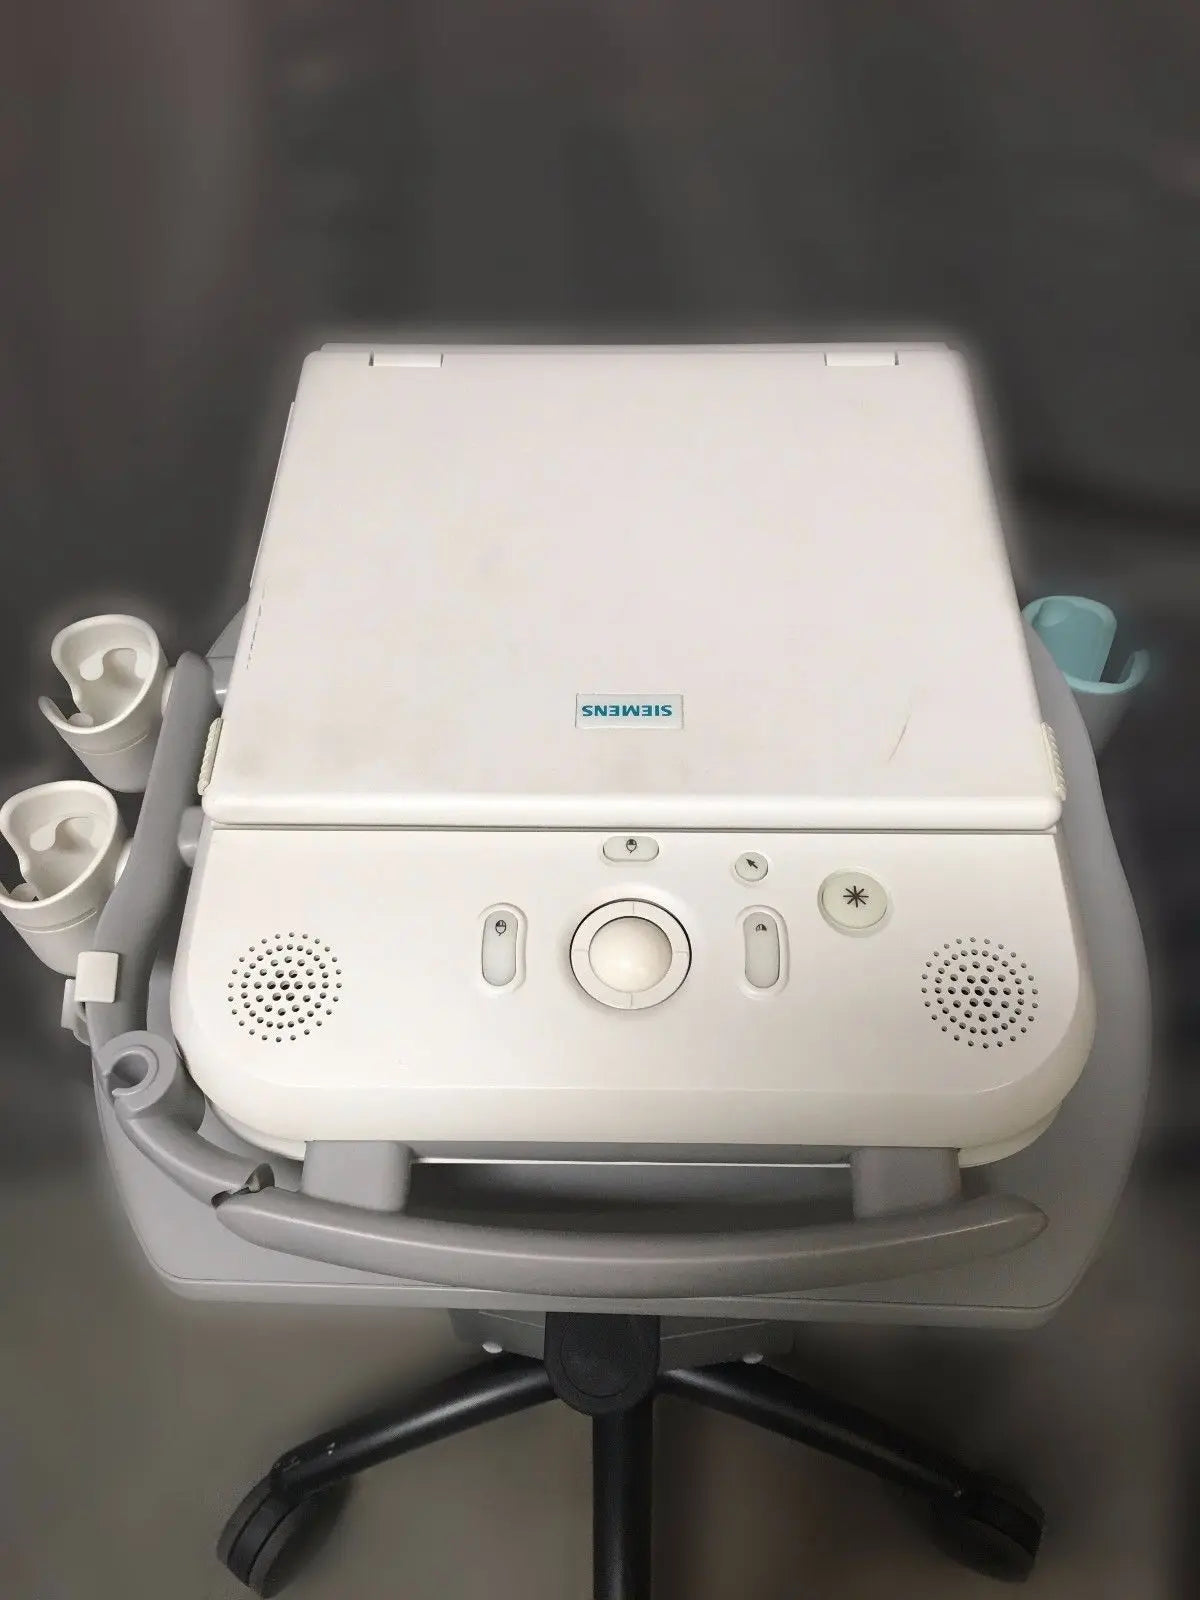 Siemens Acuson P300 Portable Ultrasound DIAGNOSTIC ULTRASOUND MACHINES FOR SALE